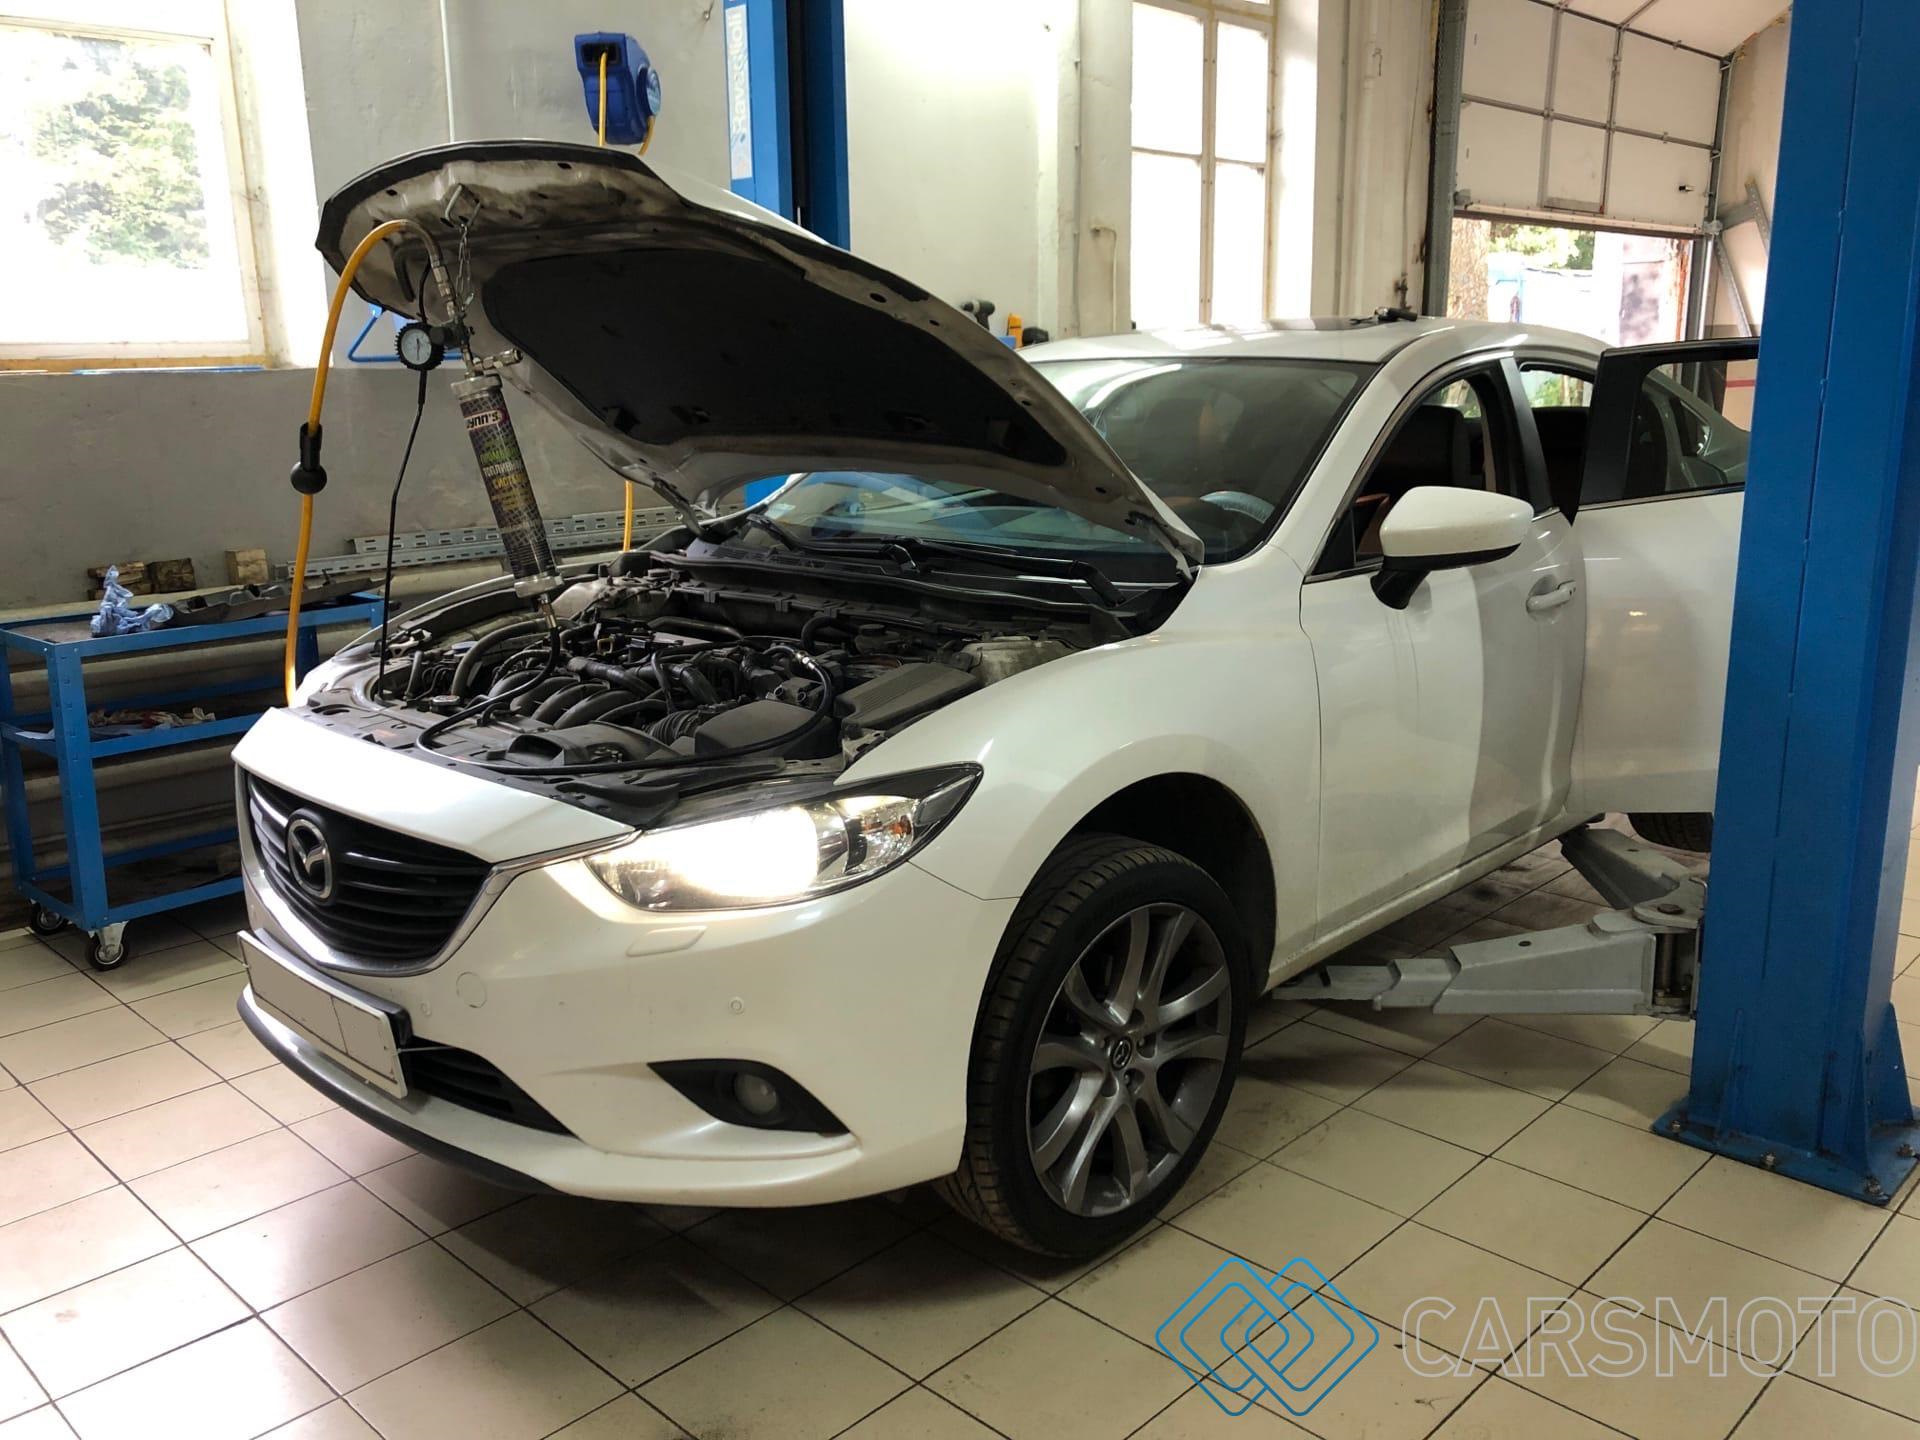 Полная аппаратная замена масла АКПП Mazda 6 (GJ) — CarsMoto Shop на DRIVE2